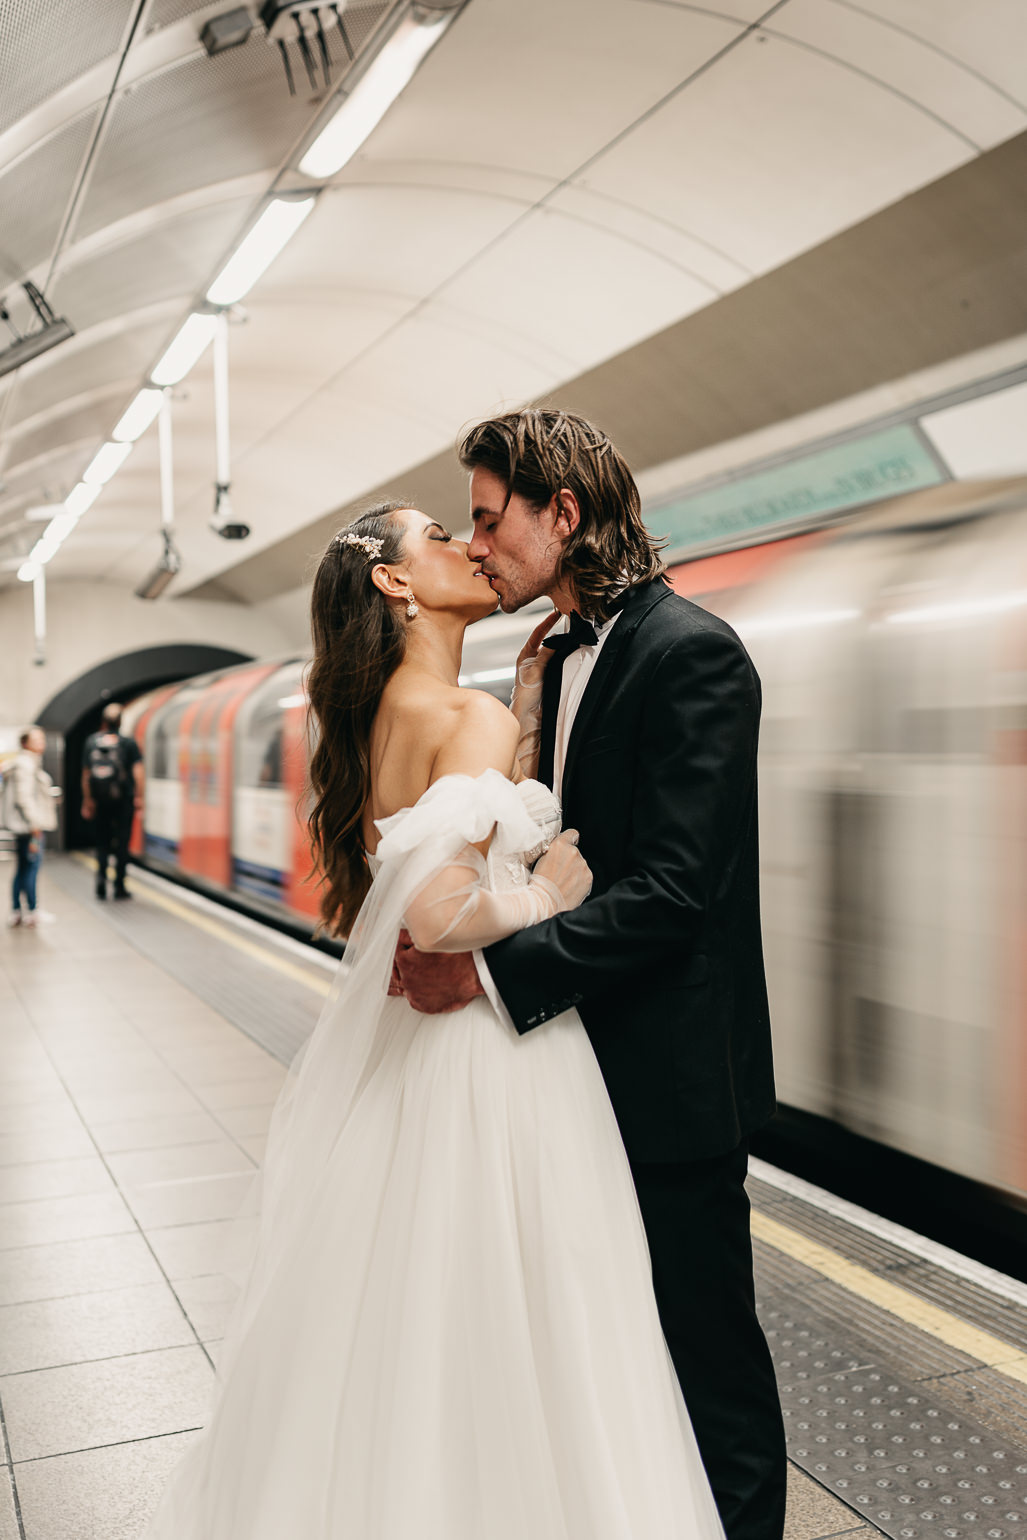 London underground wedding photos, London elopement, London wedding photographer, Monreal Bridal 'Tina' Wedding Dress